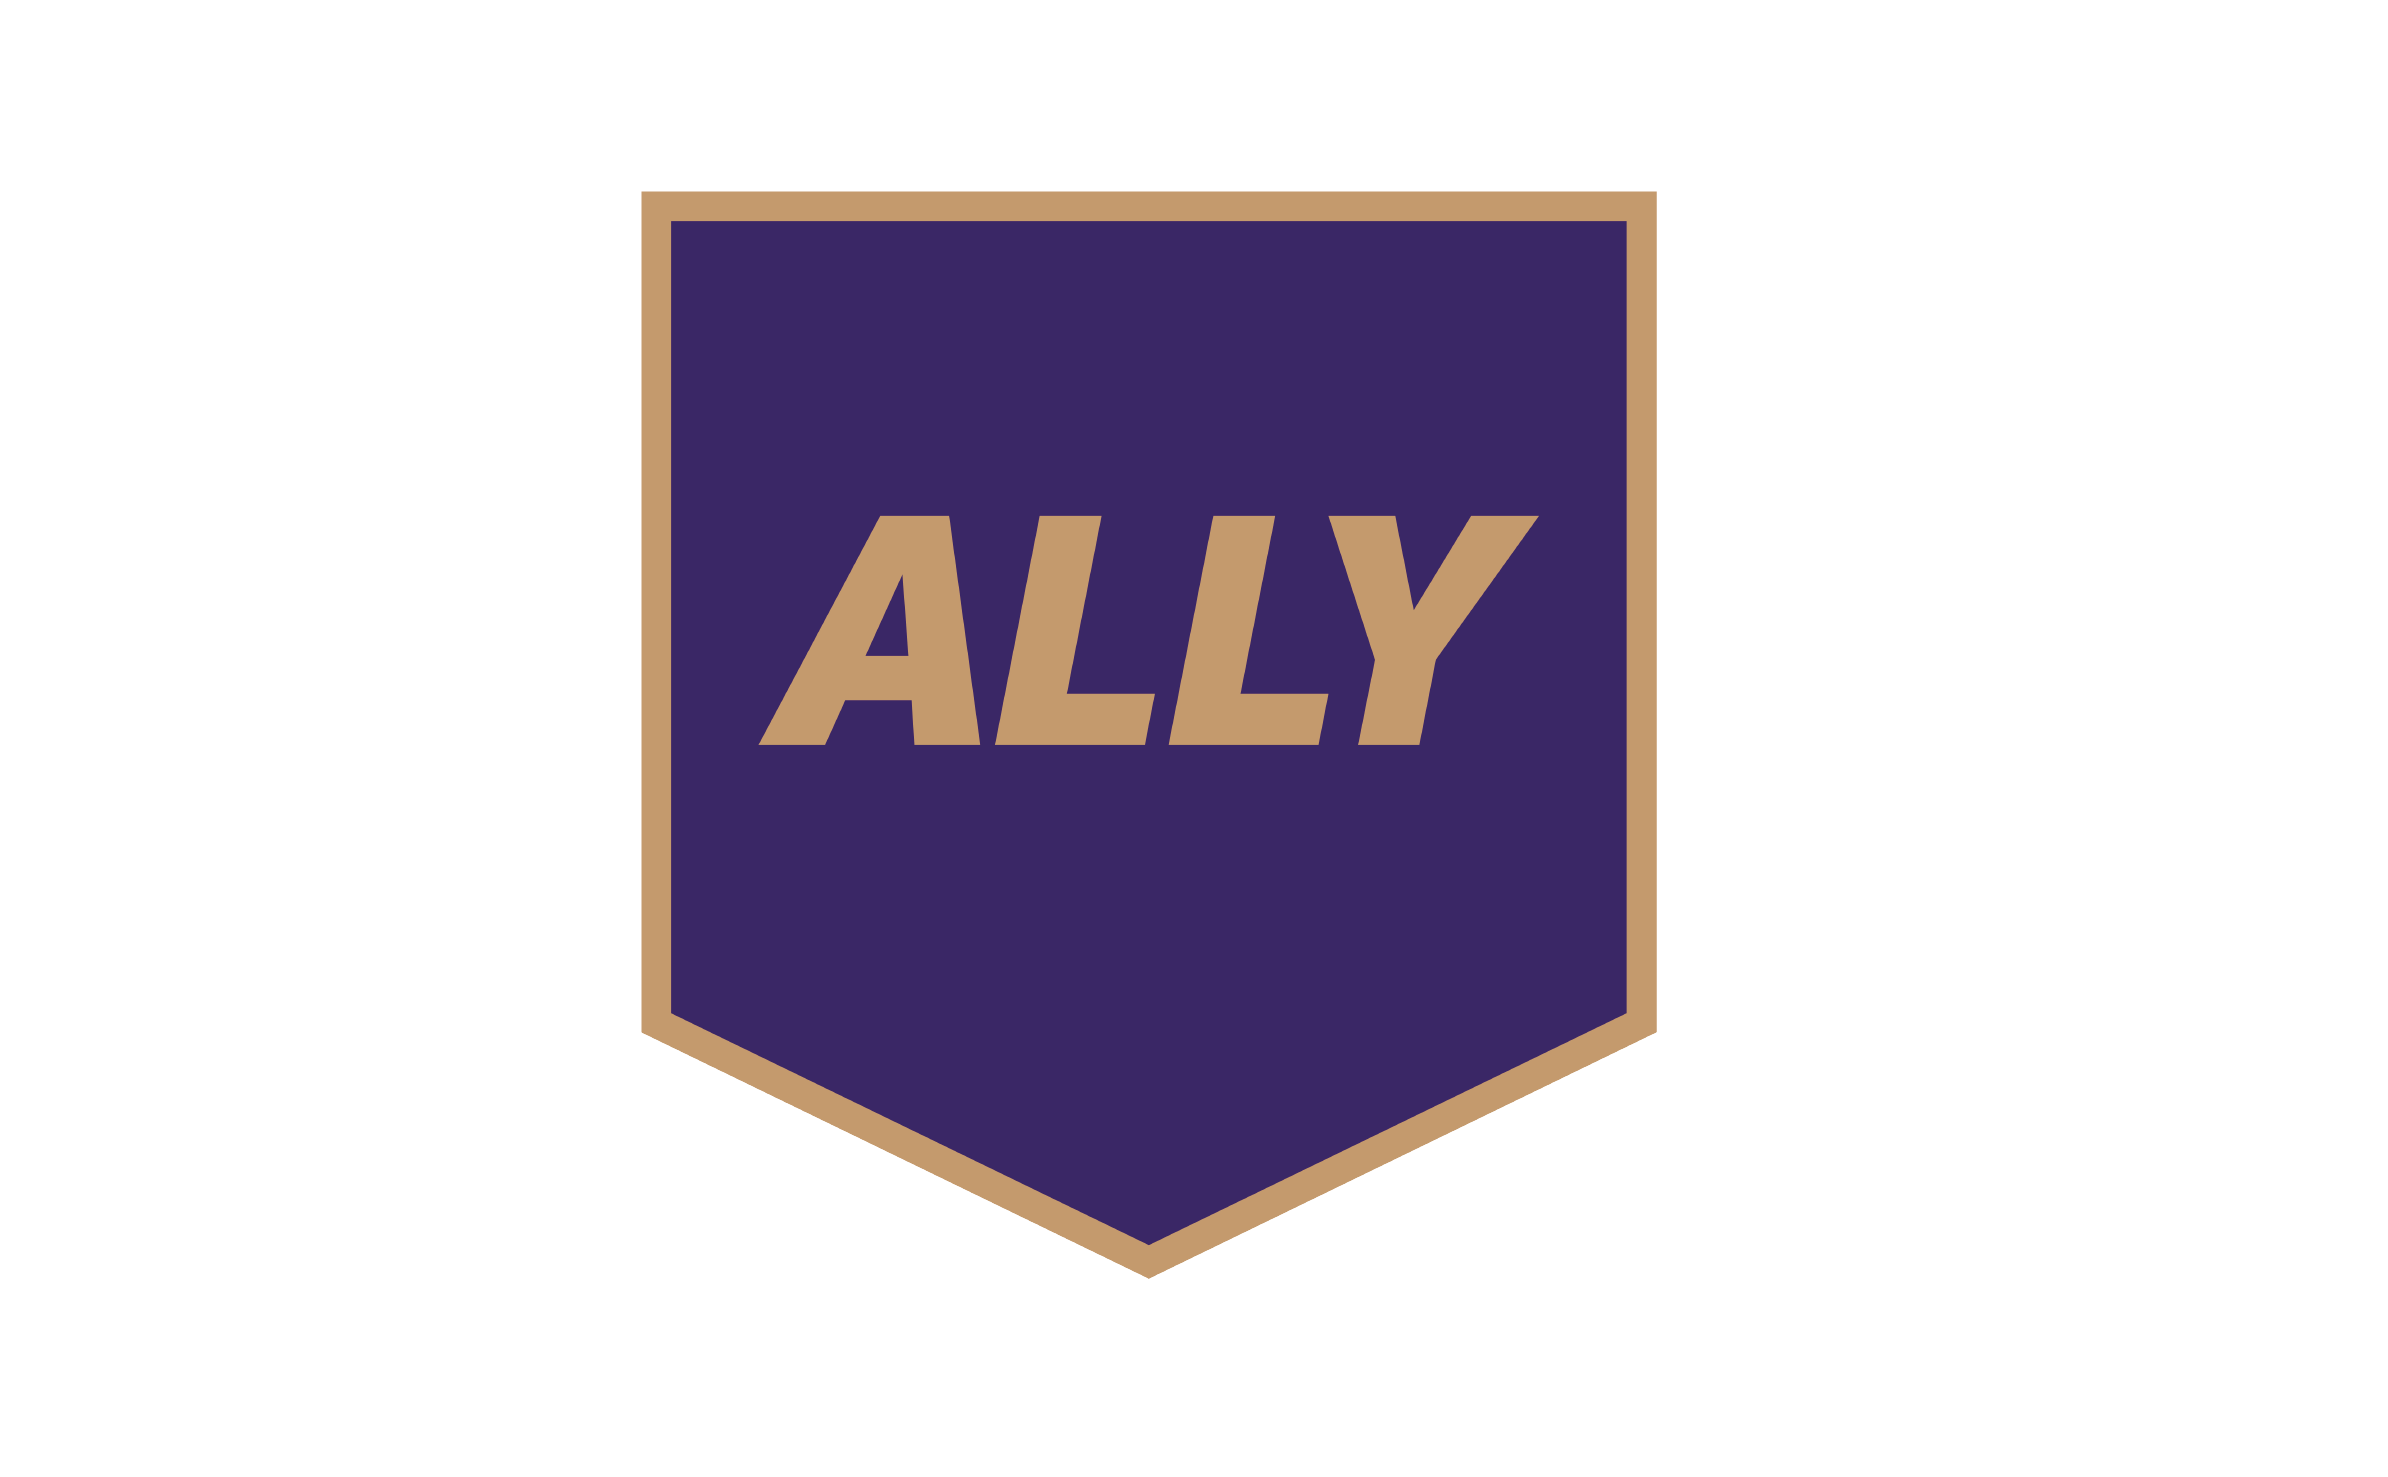 Ally pin